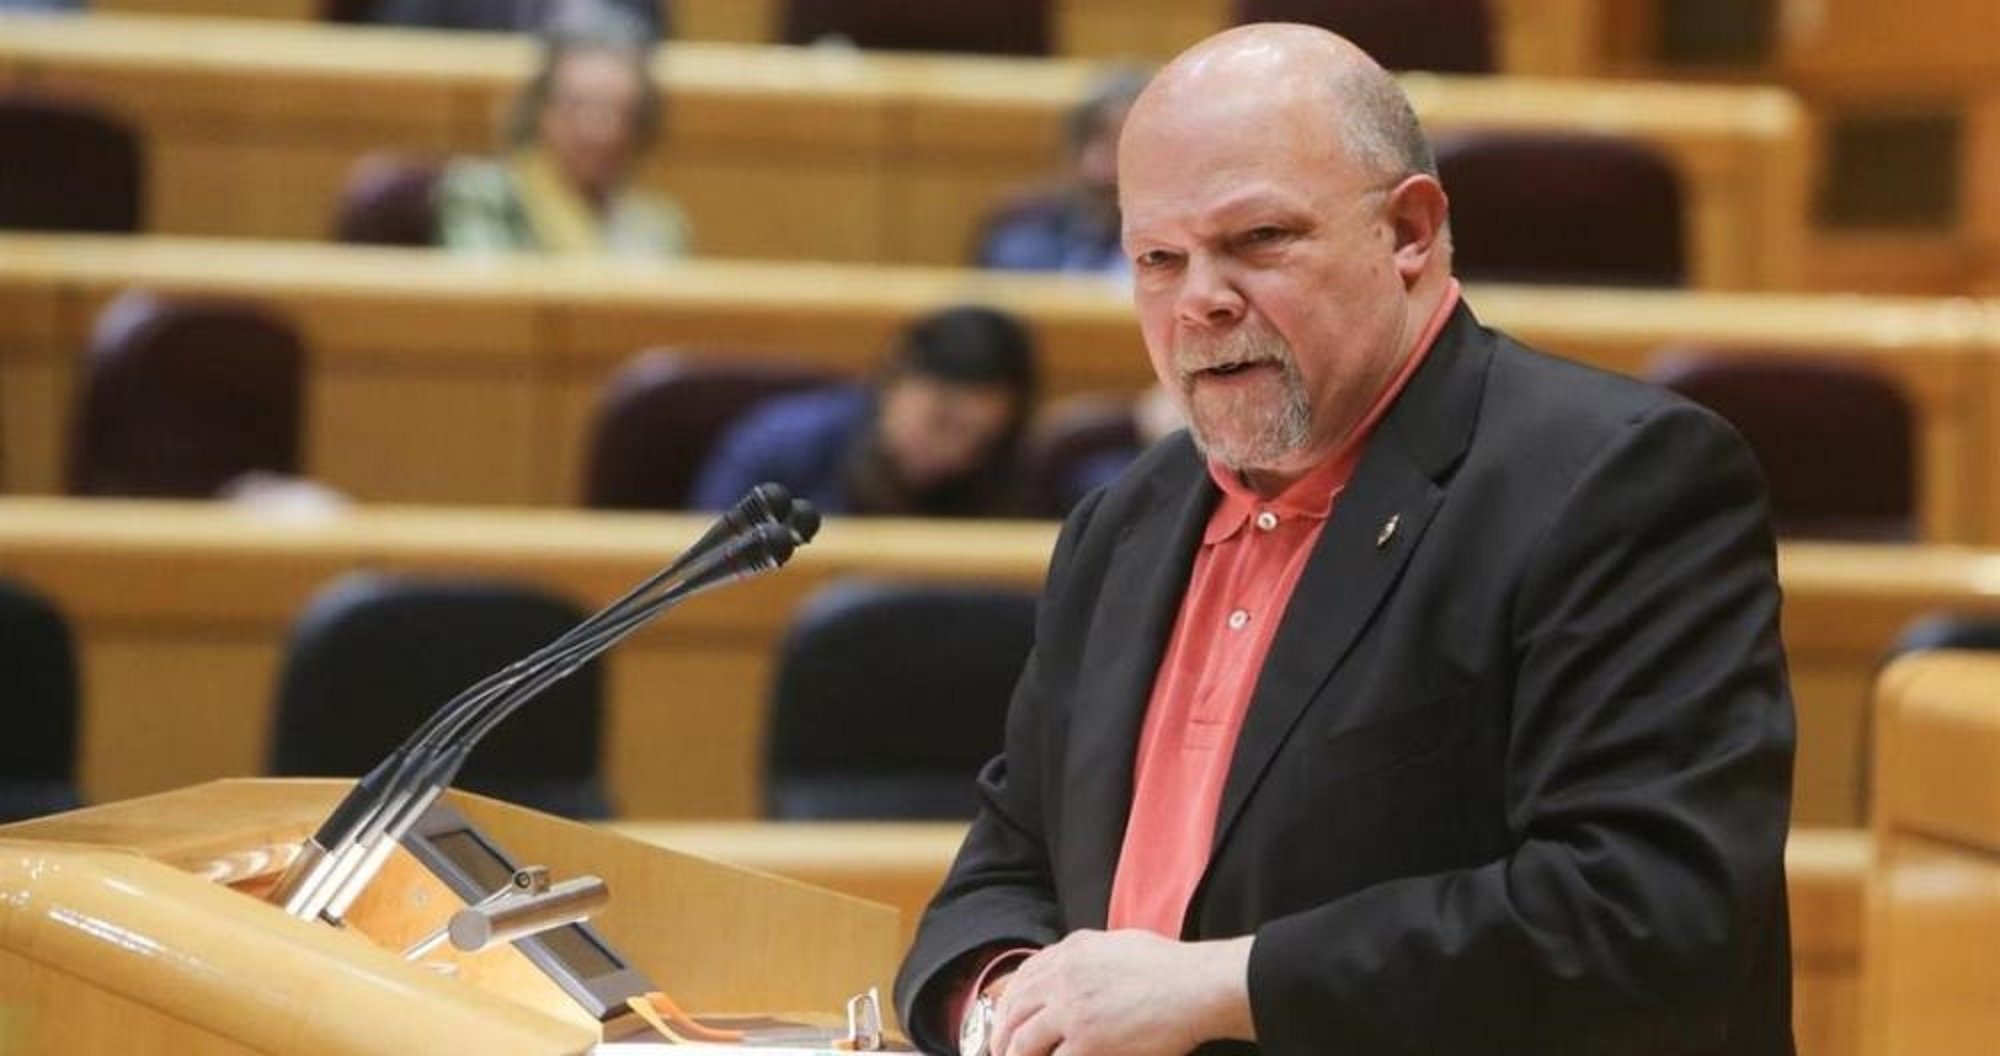 Ciudadanos senator tears up membership card after party changes